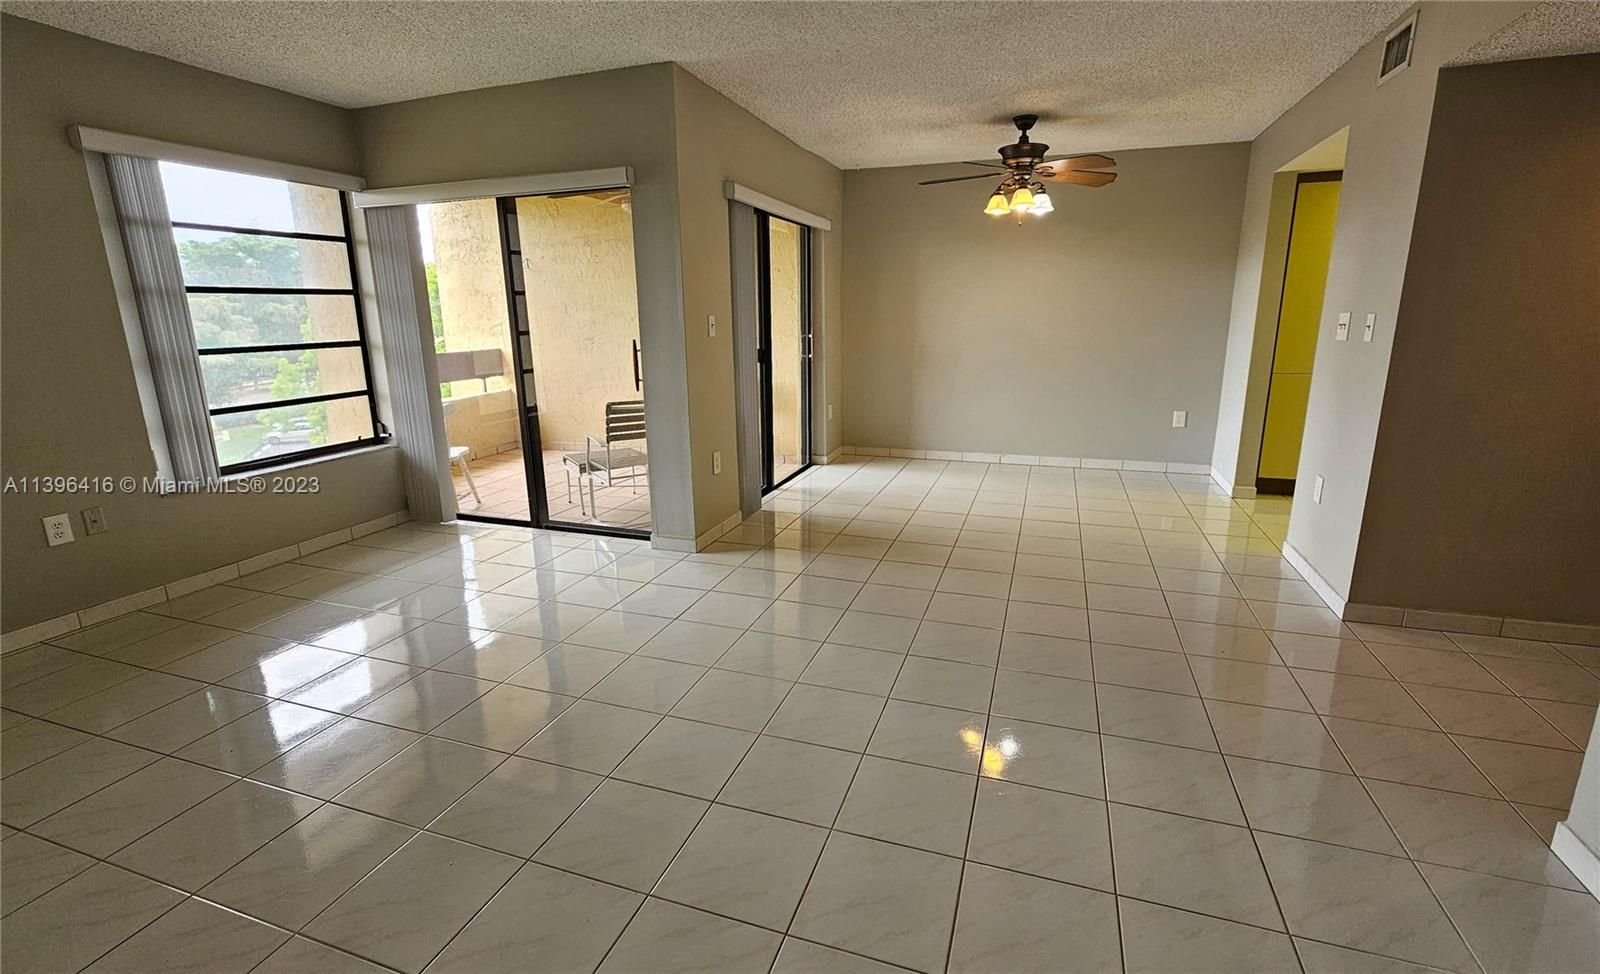 Real estate property located at 9022 123rd Ct O403, Miami-Dade County, Miami, FL